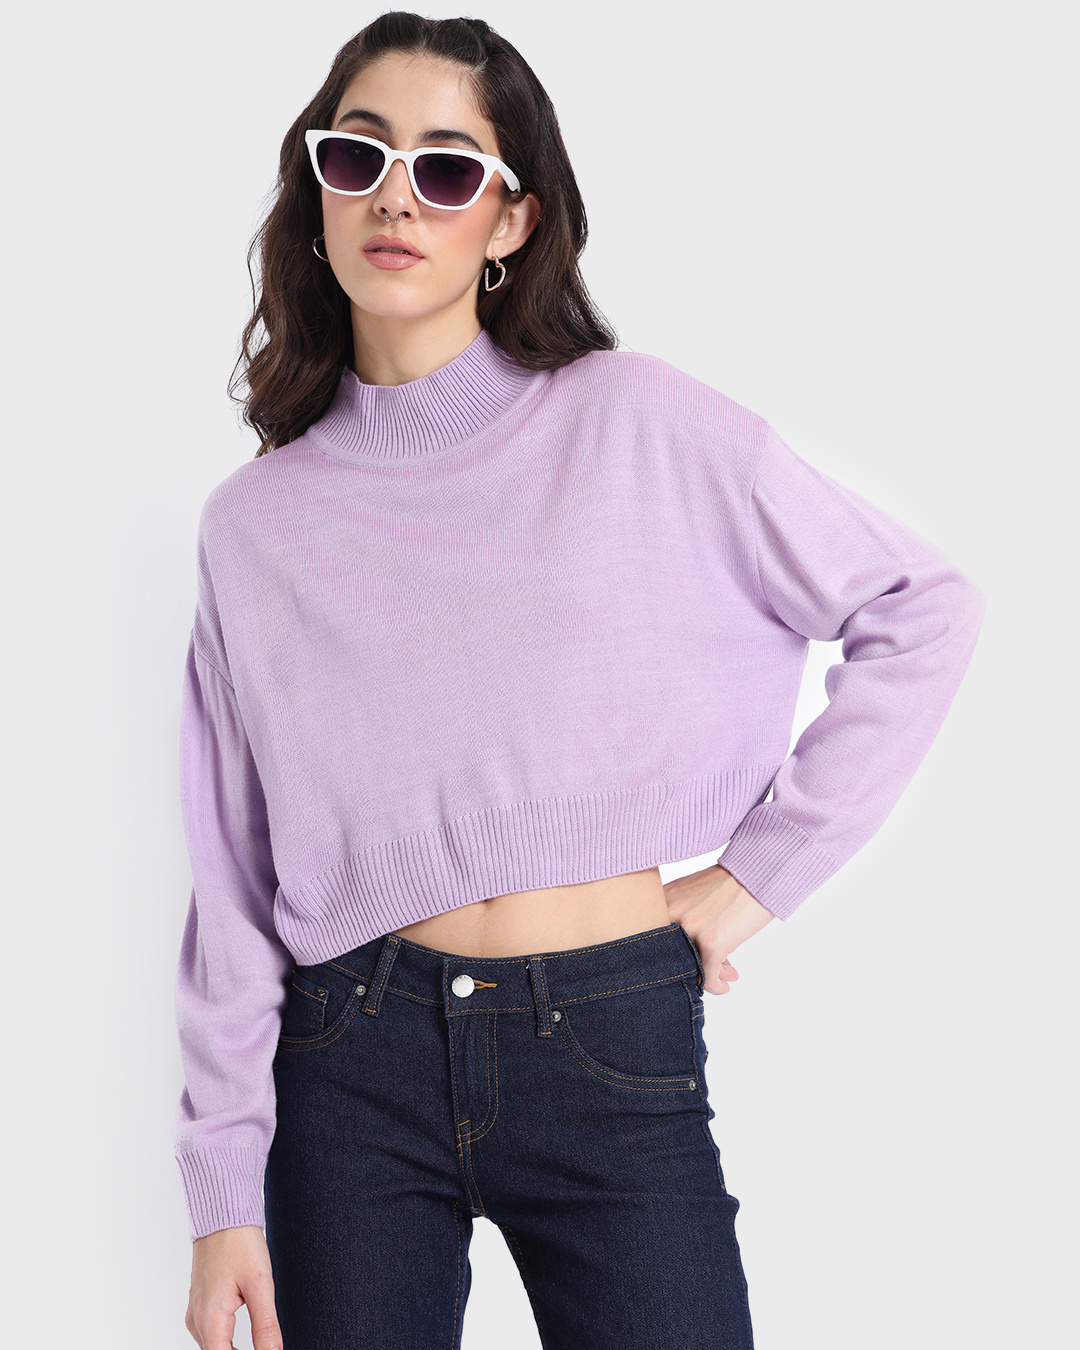 https://images.bewakoof.com/original/women-s-pastel-lilac-high-neck-oversized-crop-sweater-497716-1703750875-1.jpg